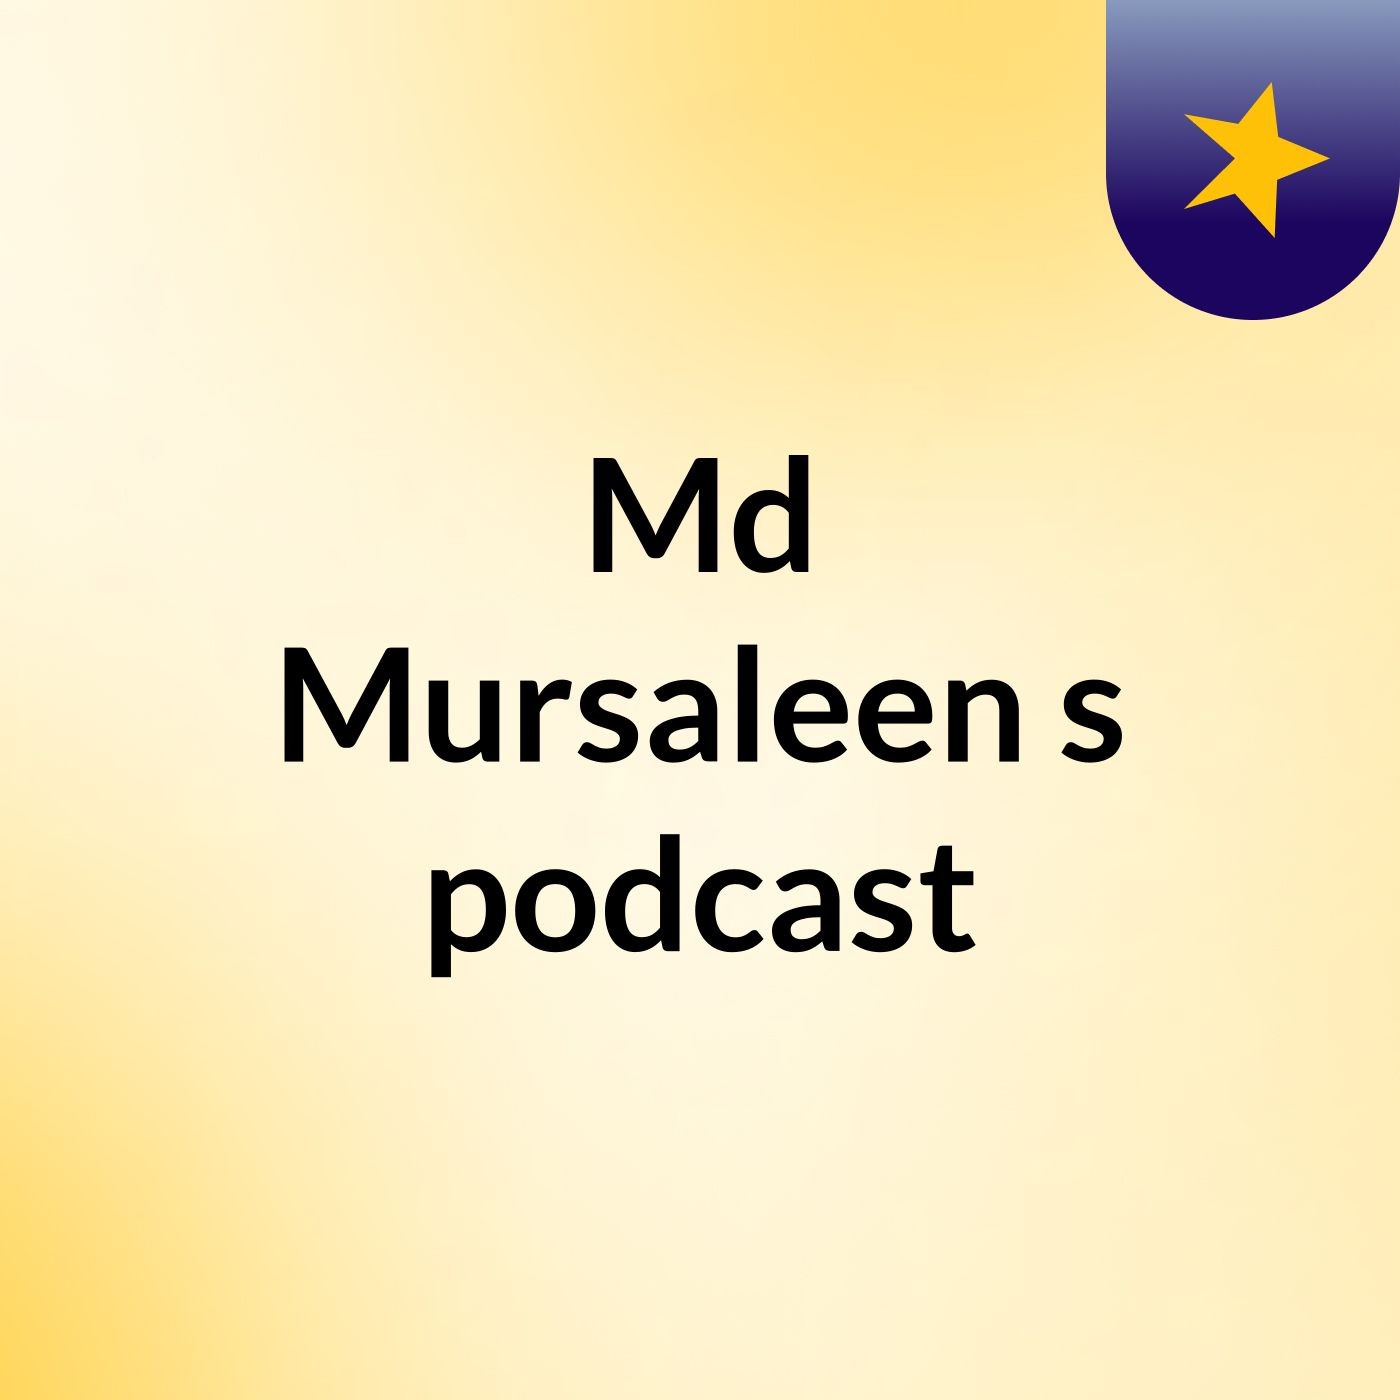 Md Mursaleen's podcast